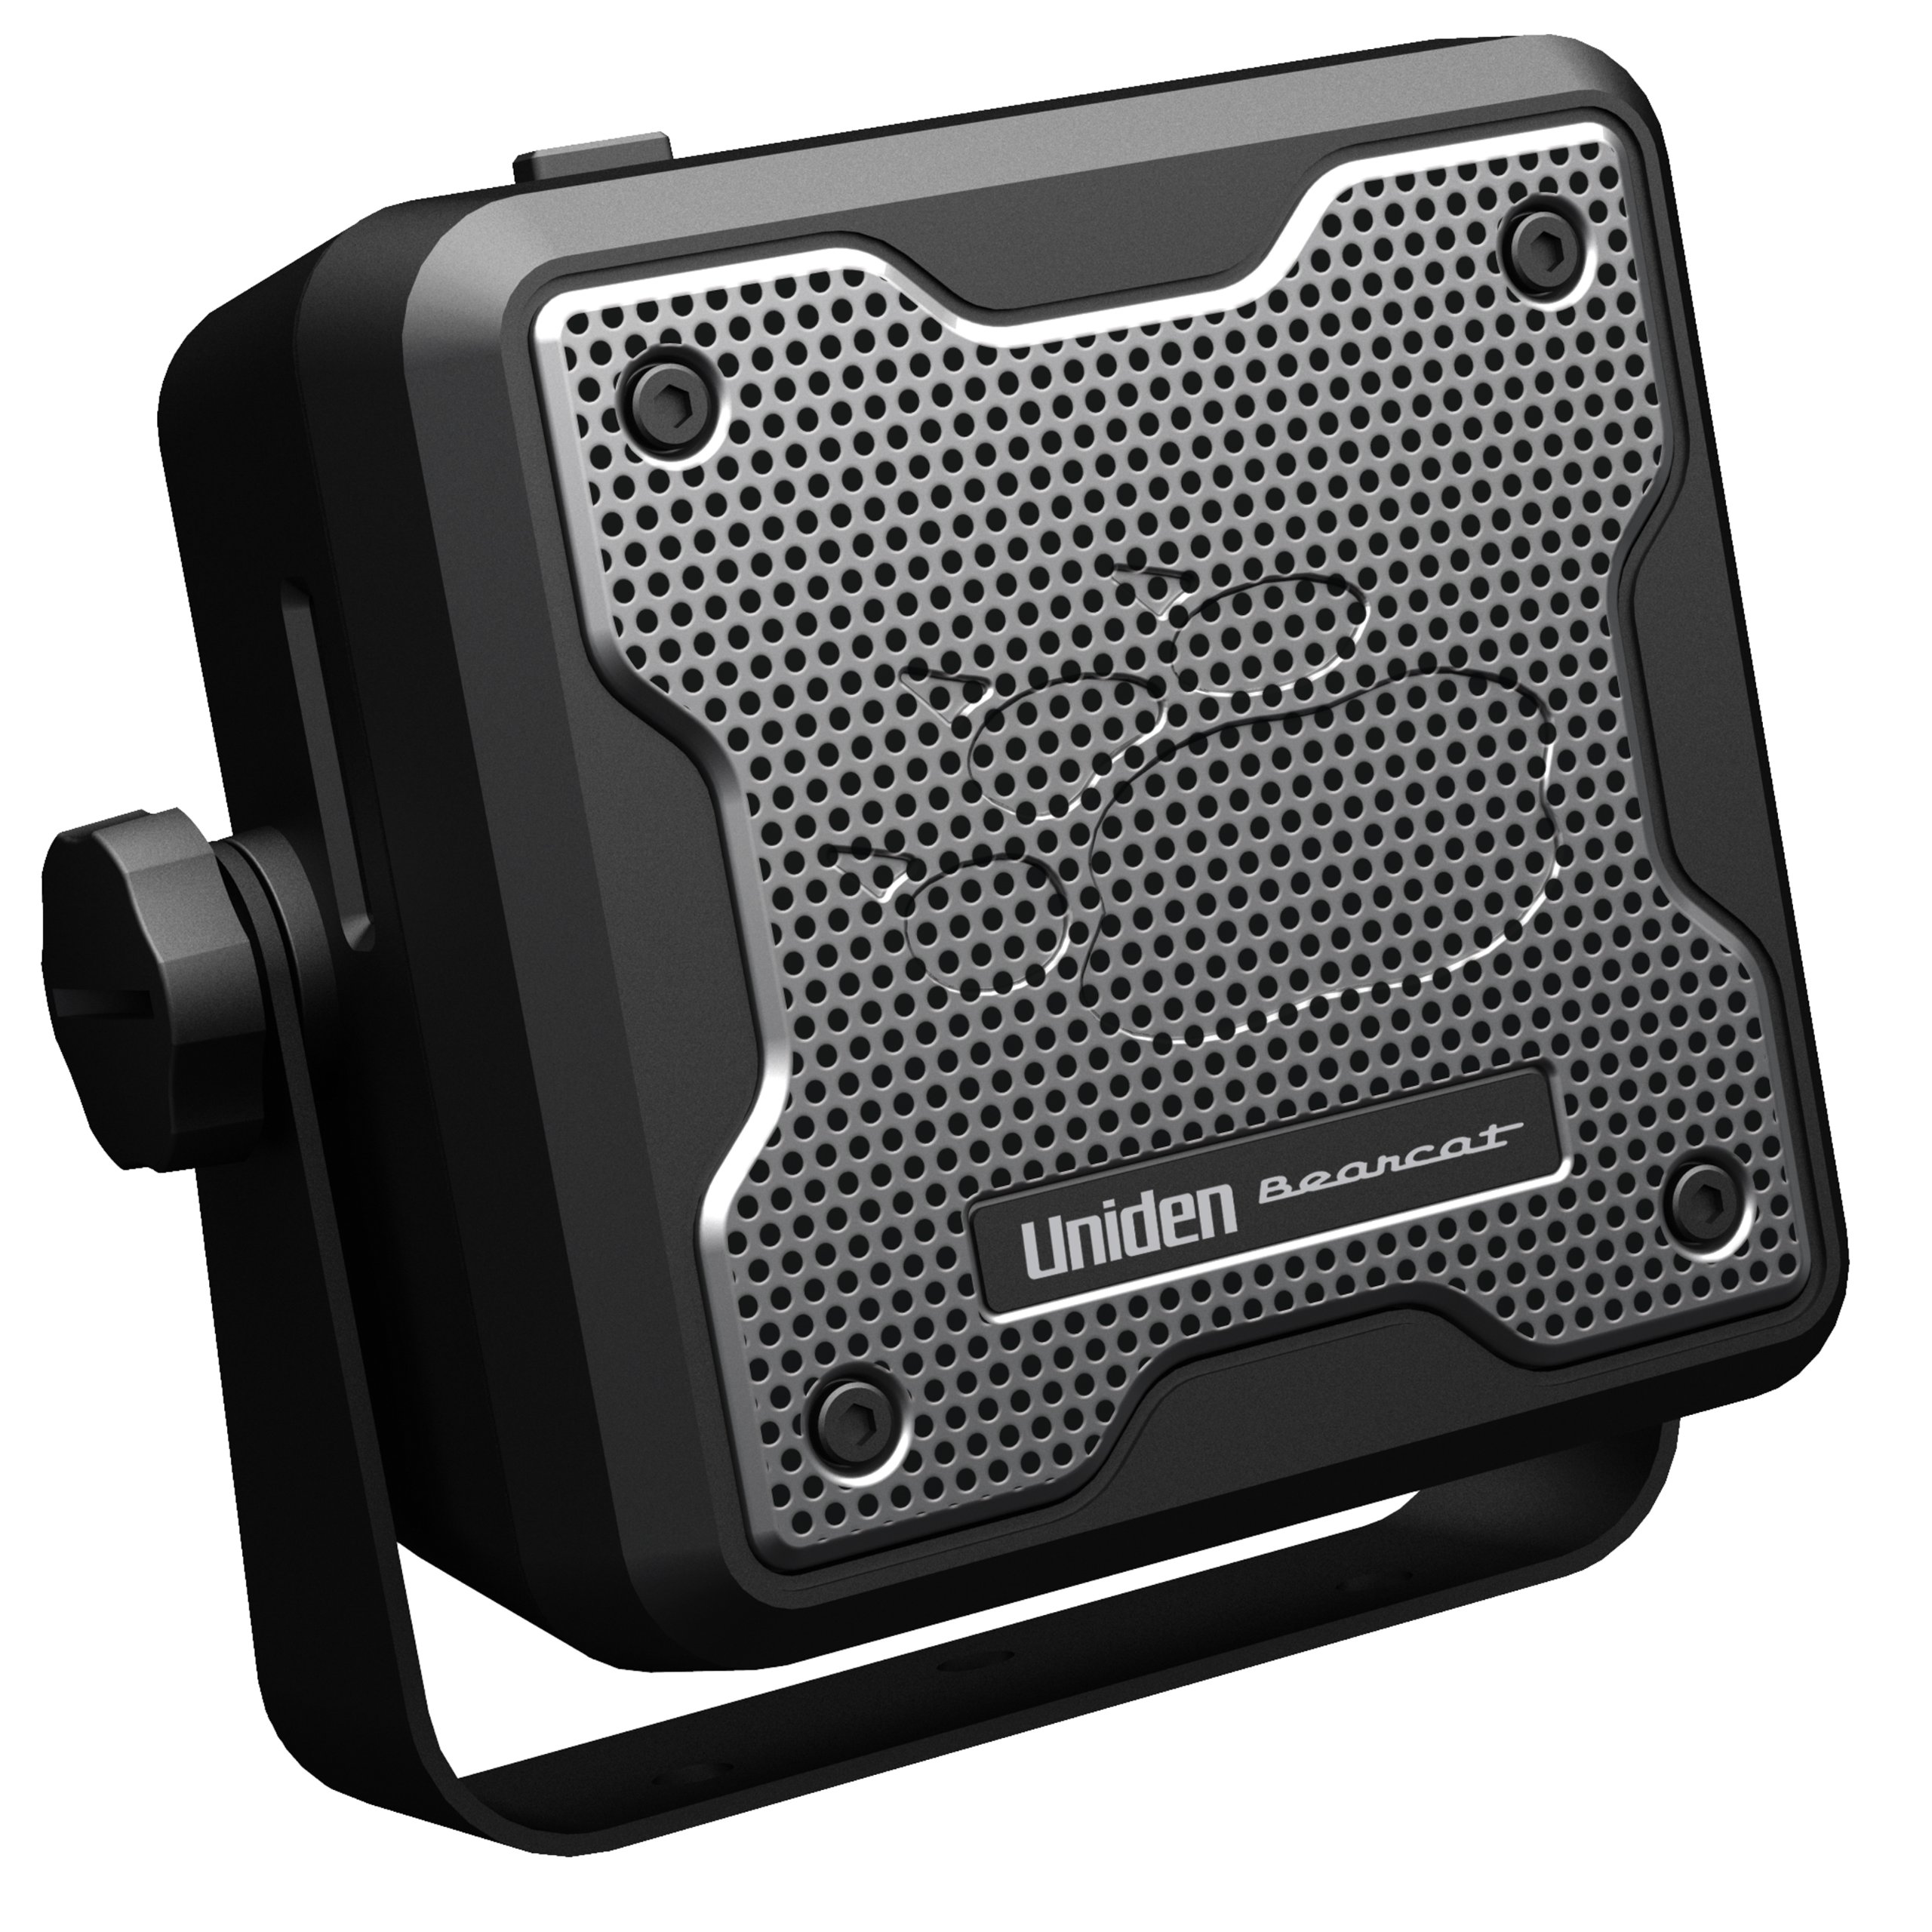 Uniden (BC15) Bearcat 15-Watt External Communications Speaker. Amplifying Uniden Scanners, CB Radios, & More (Black) $19.99 + Free Shipping w/ Prime or on $35+